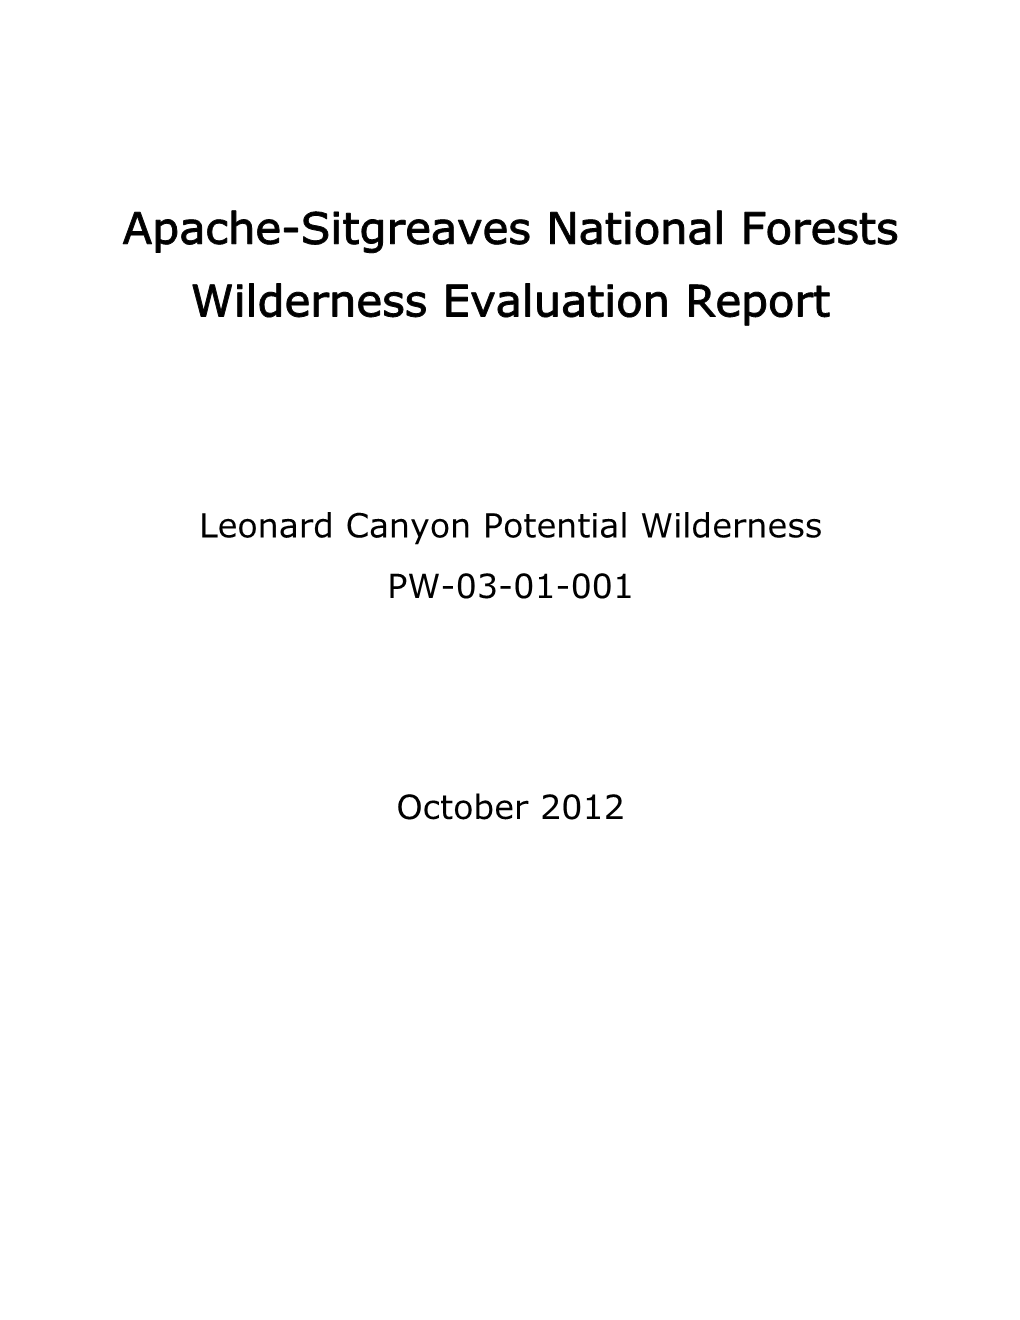 Leonard Canyon Potential Wilderness PW-03-01-001